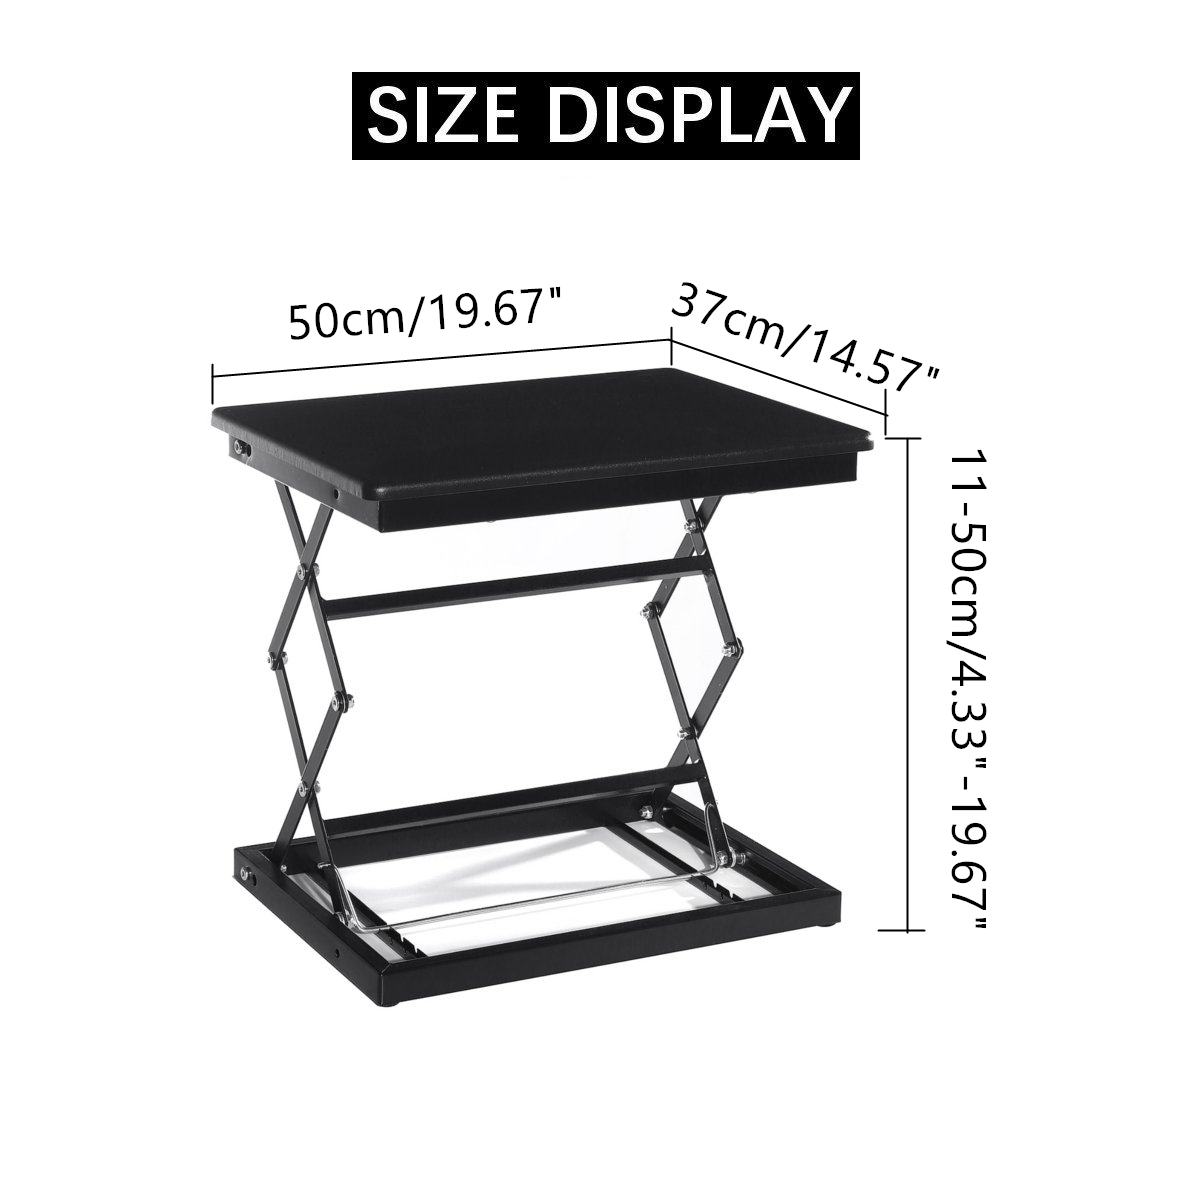 Foldable-Computer-Desk-Height-Adjustable-Laptop-Desk-1967quotL-1457quotW-Workstation-Essential-For-H-1638241-9